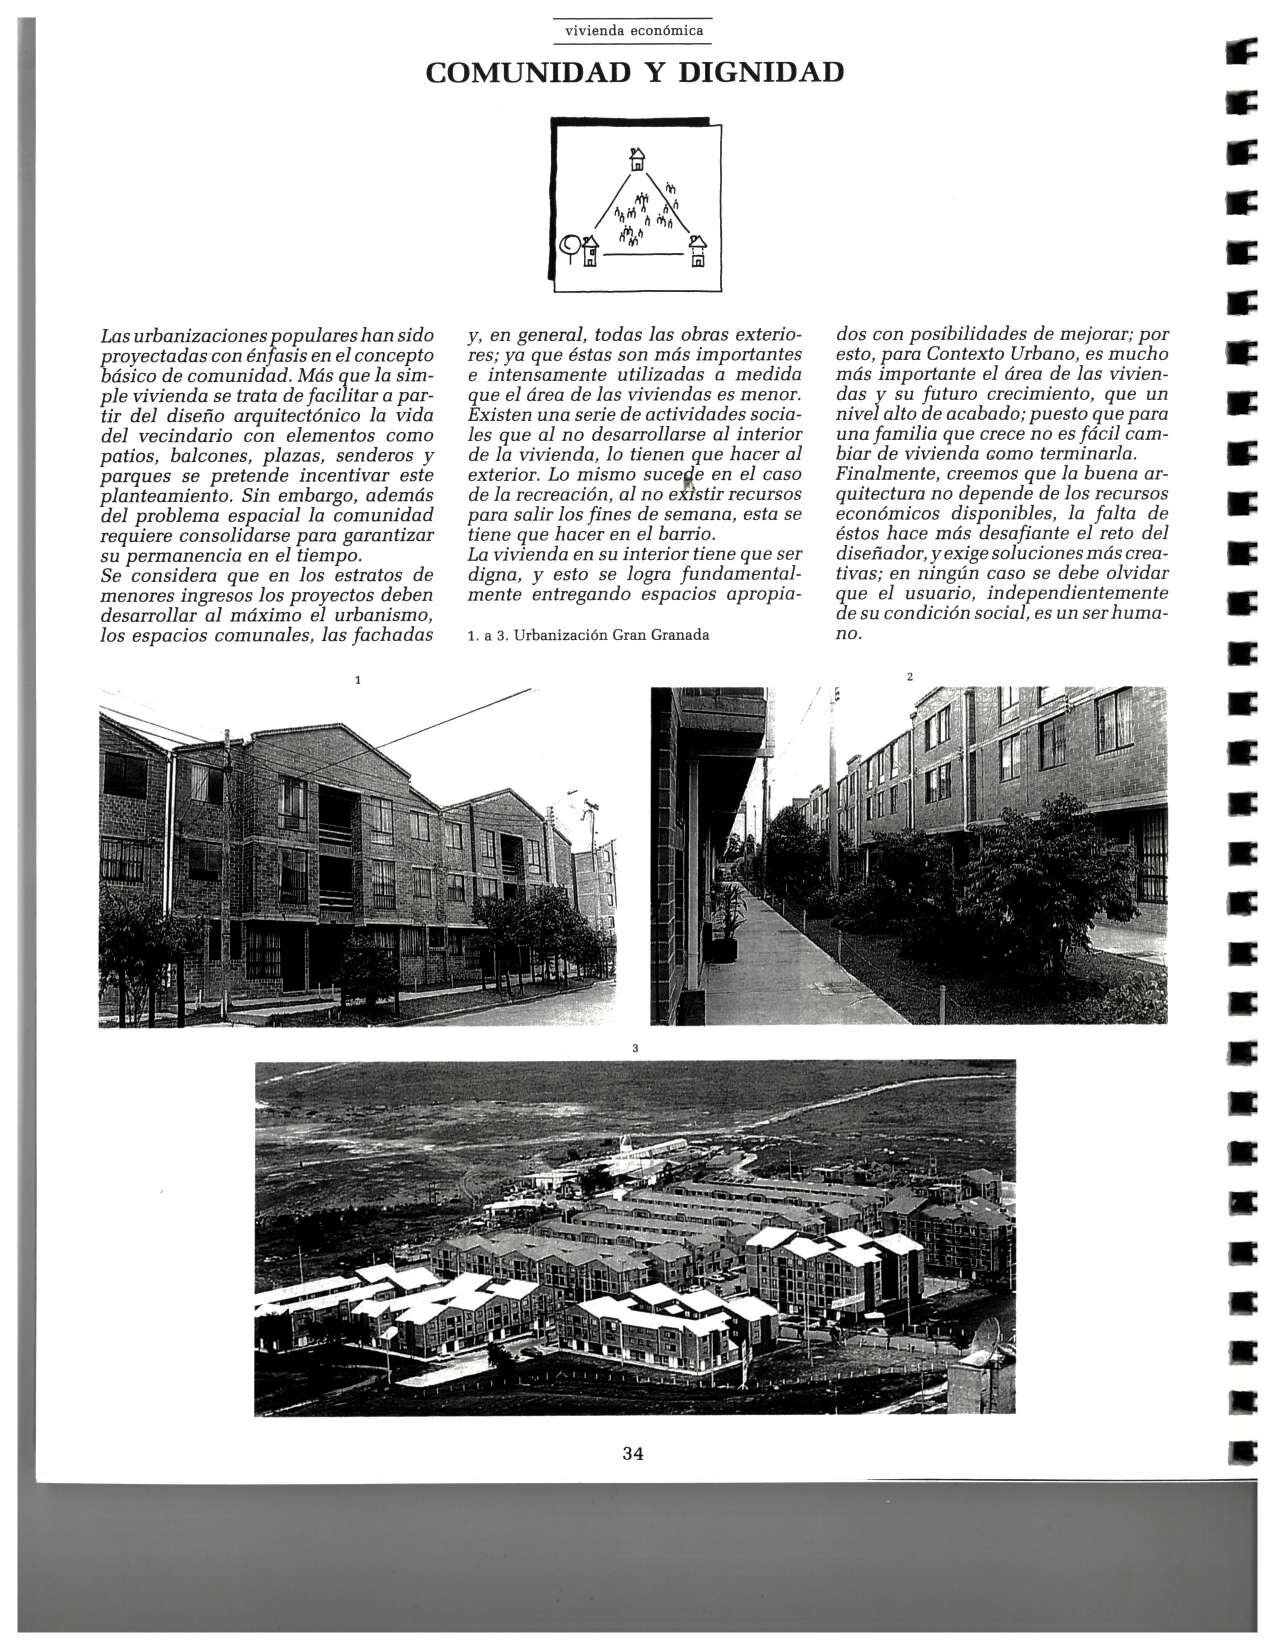 1995_Obra Contexto Urbano_Revista PROA_compressed_page-0034.jpg